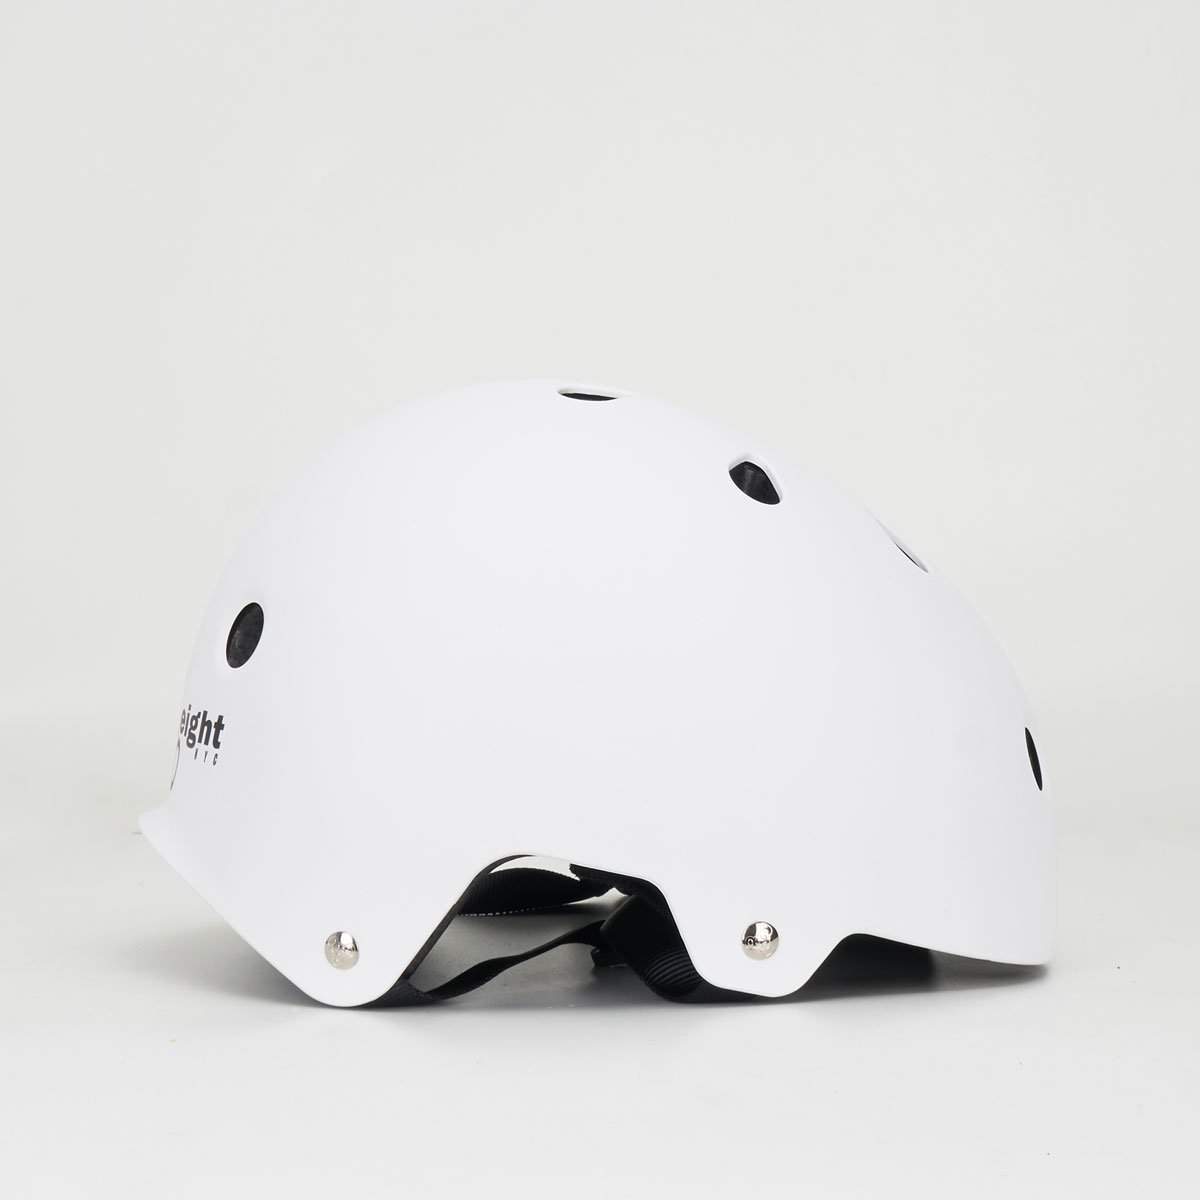 Triple 8 Dual Certified w/ EPS Helmet White-Triple 8-Aggressive Skate,Helmets,Protective Gear,white